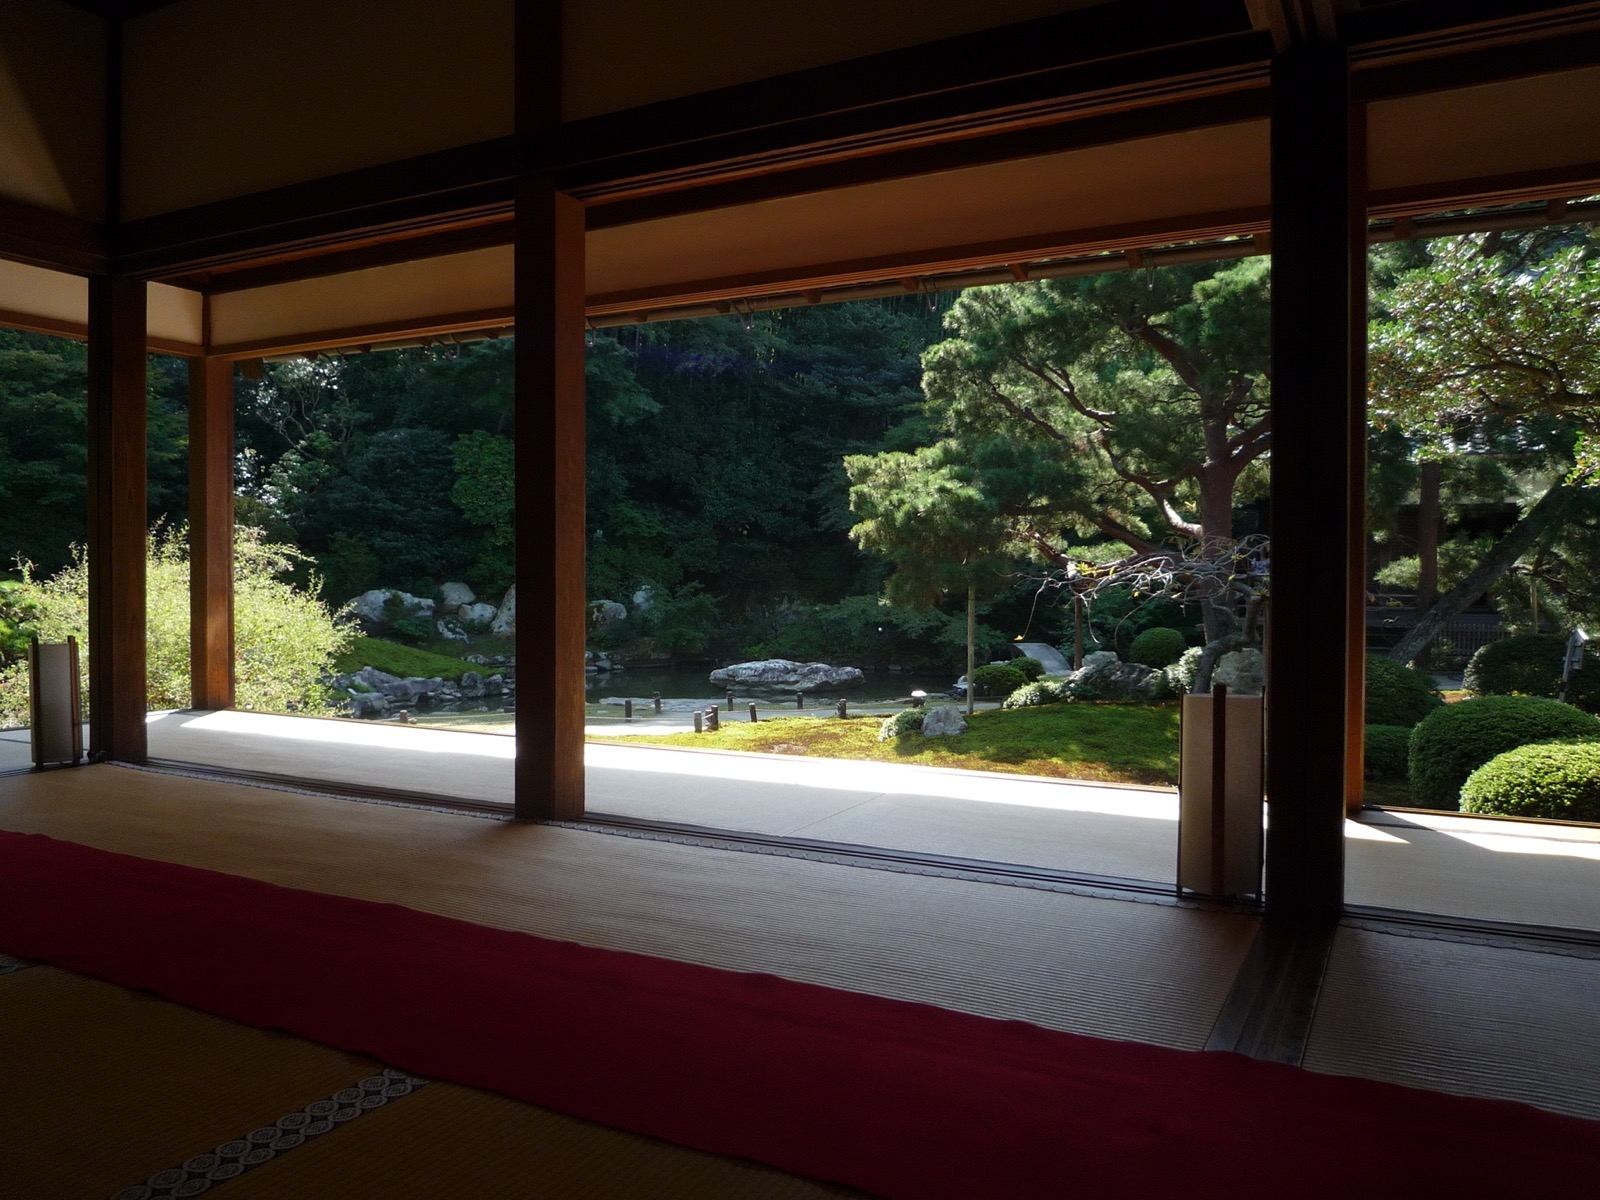 Photo of Shorenin Temple, Japan (20131014 10 Kyoto - Higashiyama - Shoren-in Temple by Sjaak Kempe)